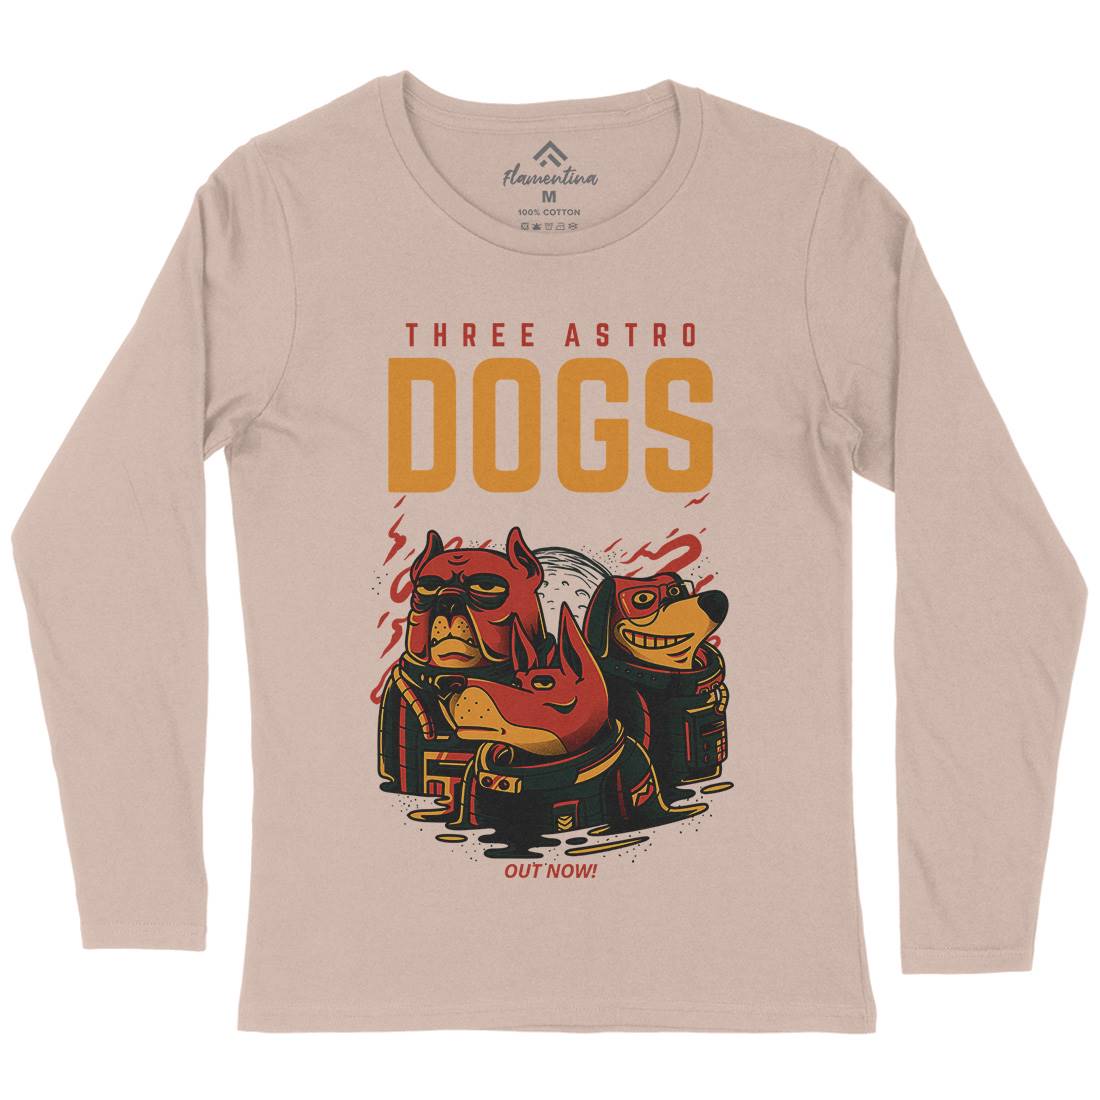 Three Astro Dogs Womens Long Sleeve T-Shirt Animals D861